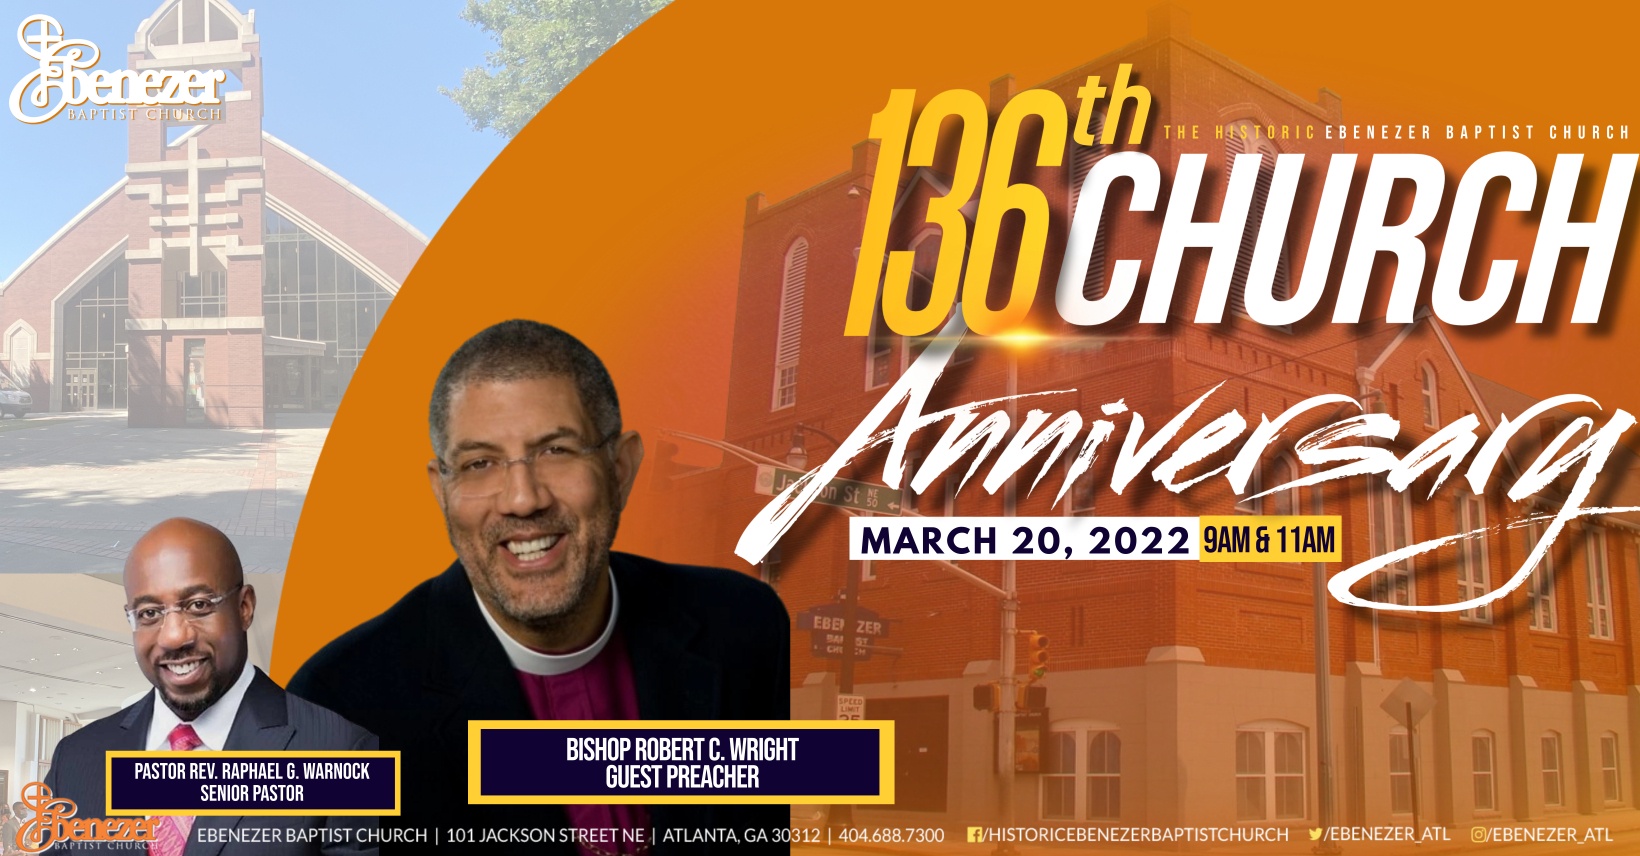 Bishop Wright to Preach at Ebenezer 136th Anniversary